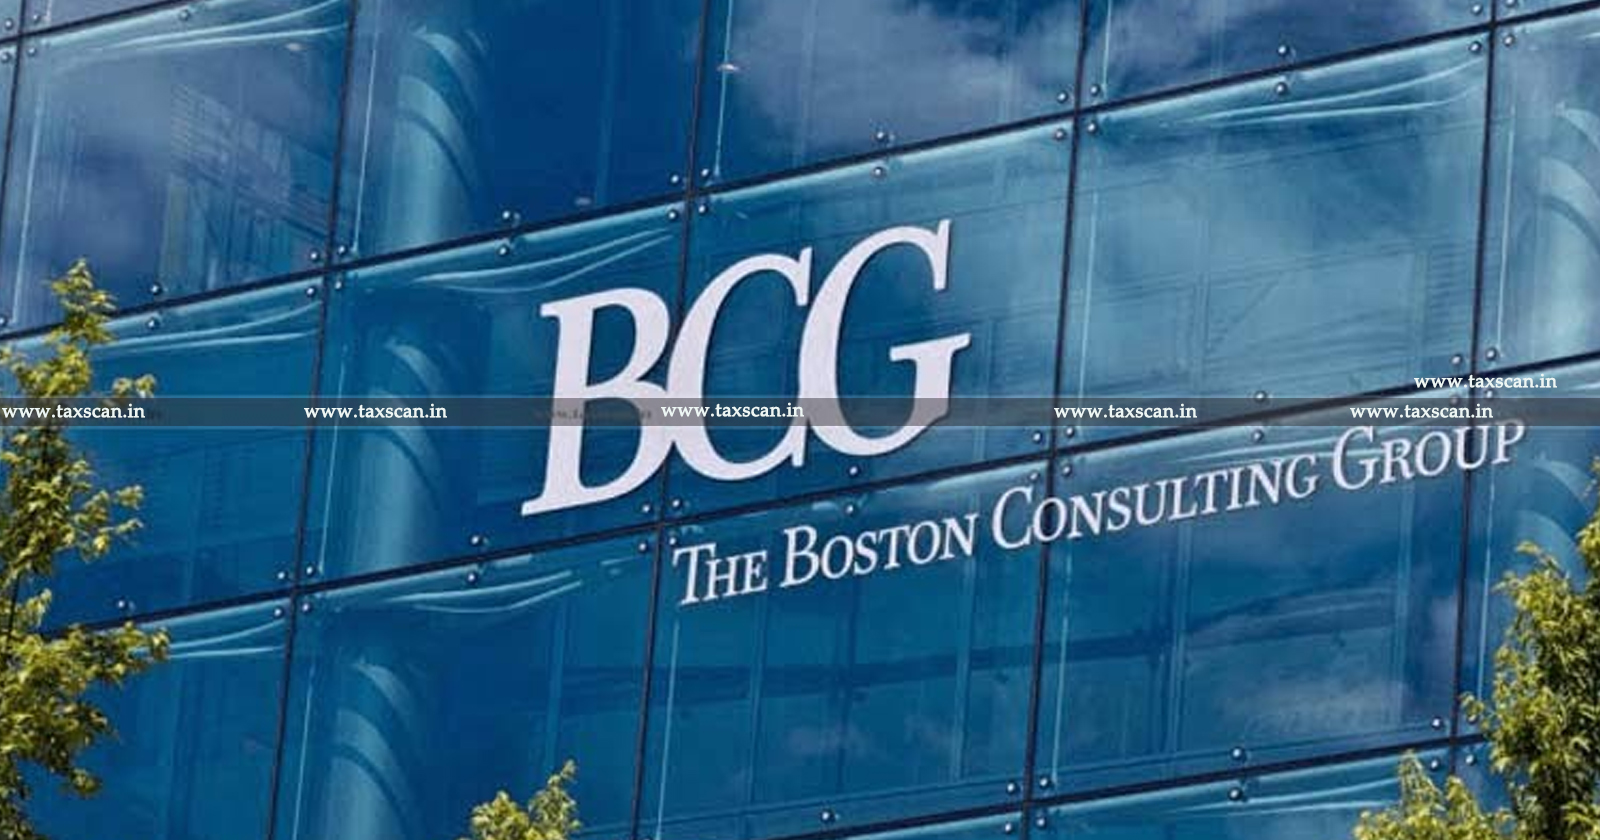 CA - MBA - Vacancy in BCG - BCG - CA Vacancy in BCG - MBA jobs in BCG - taxscan